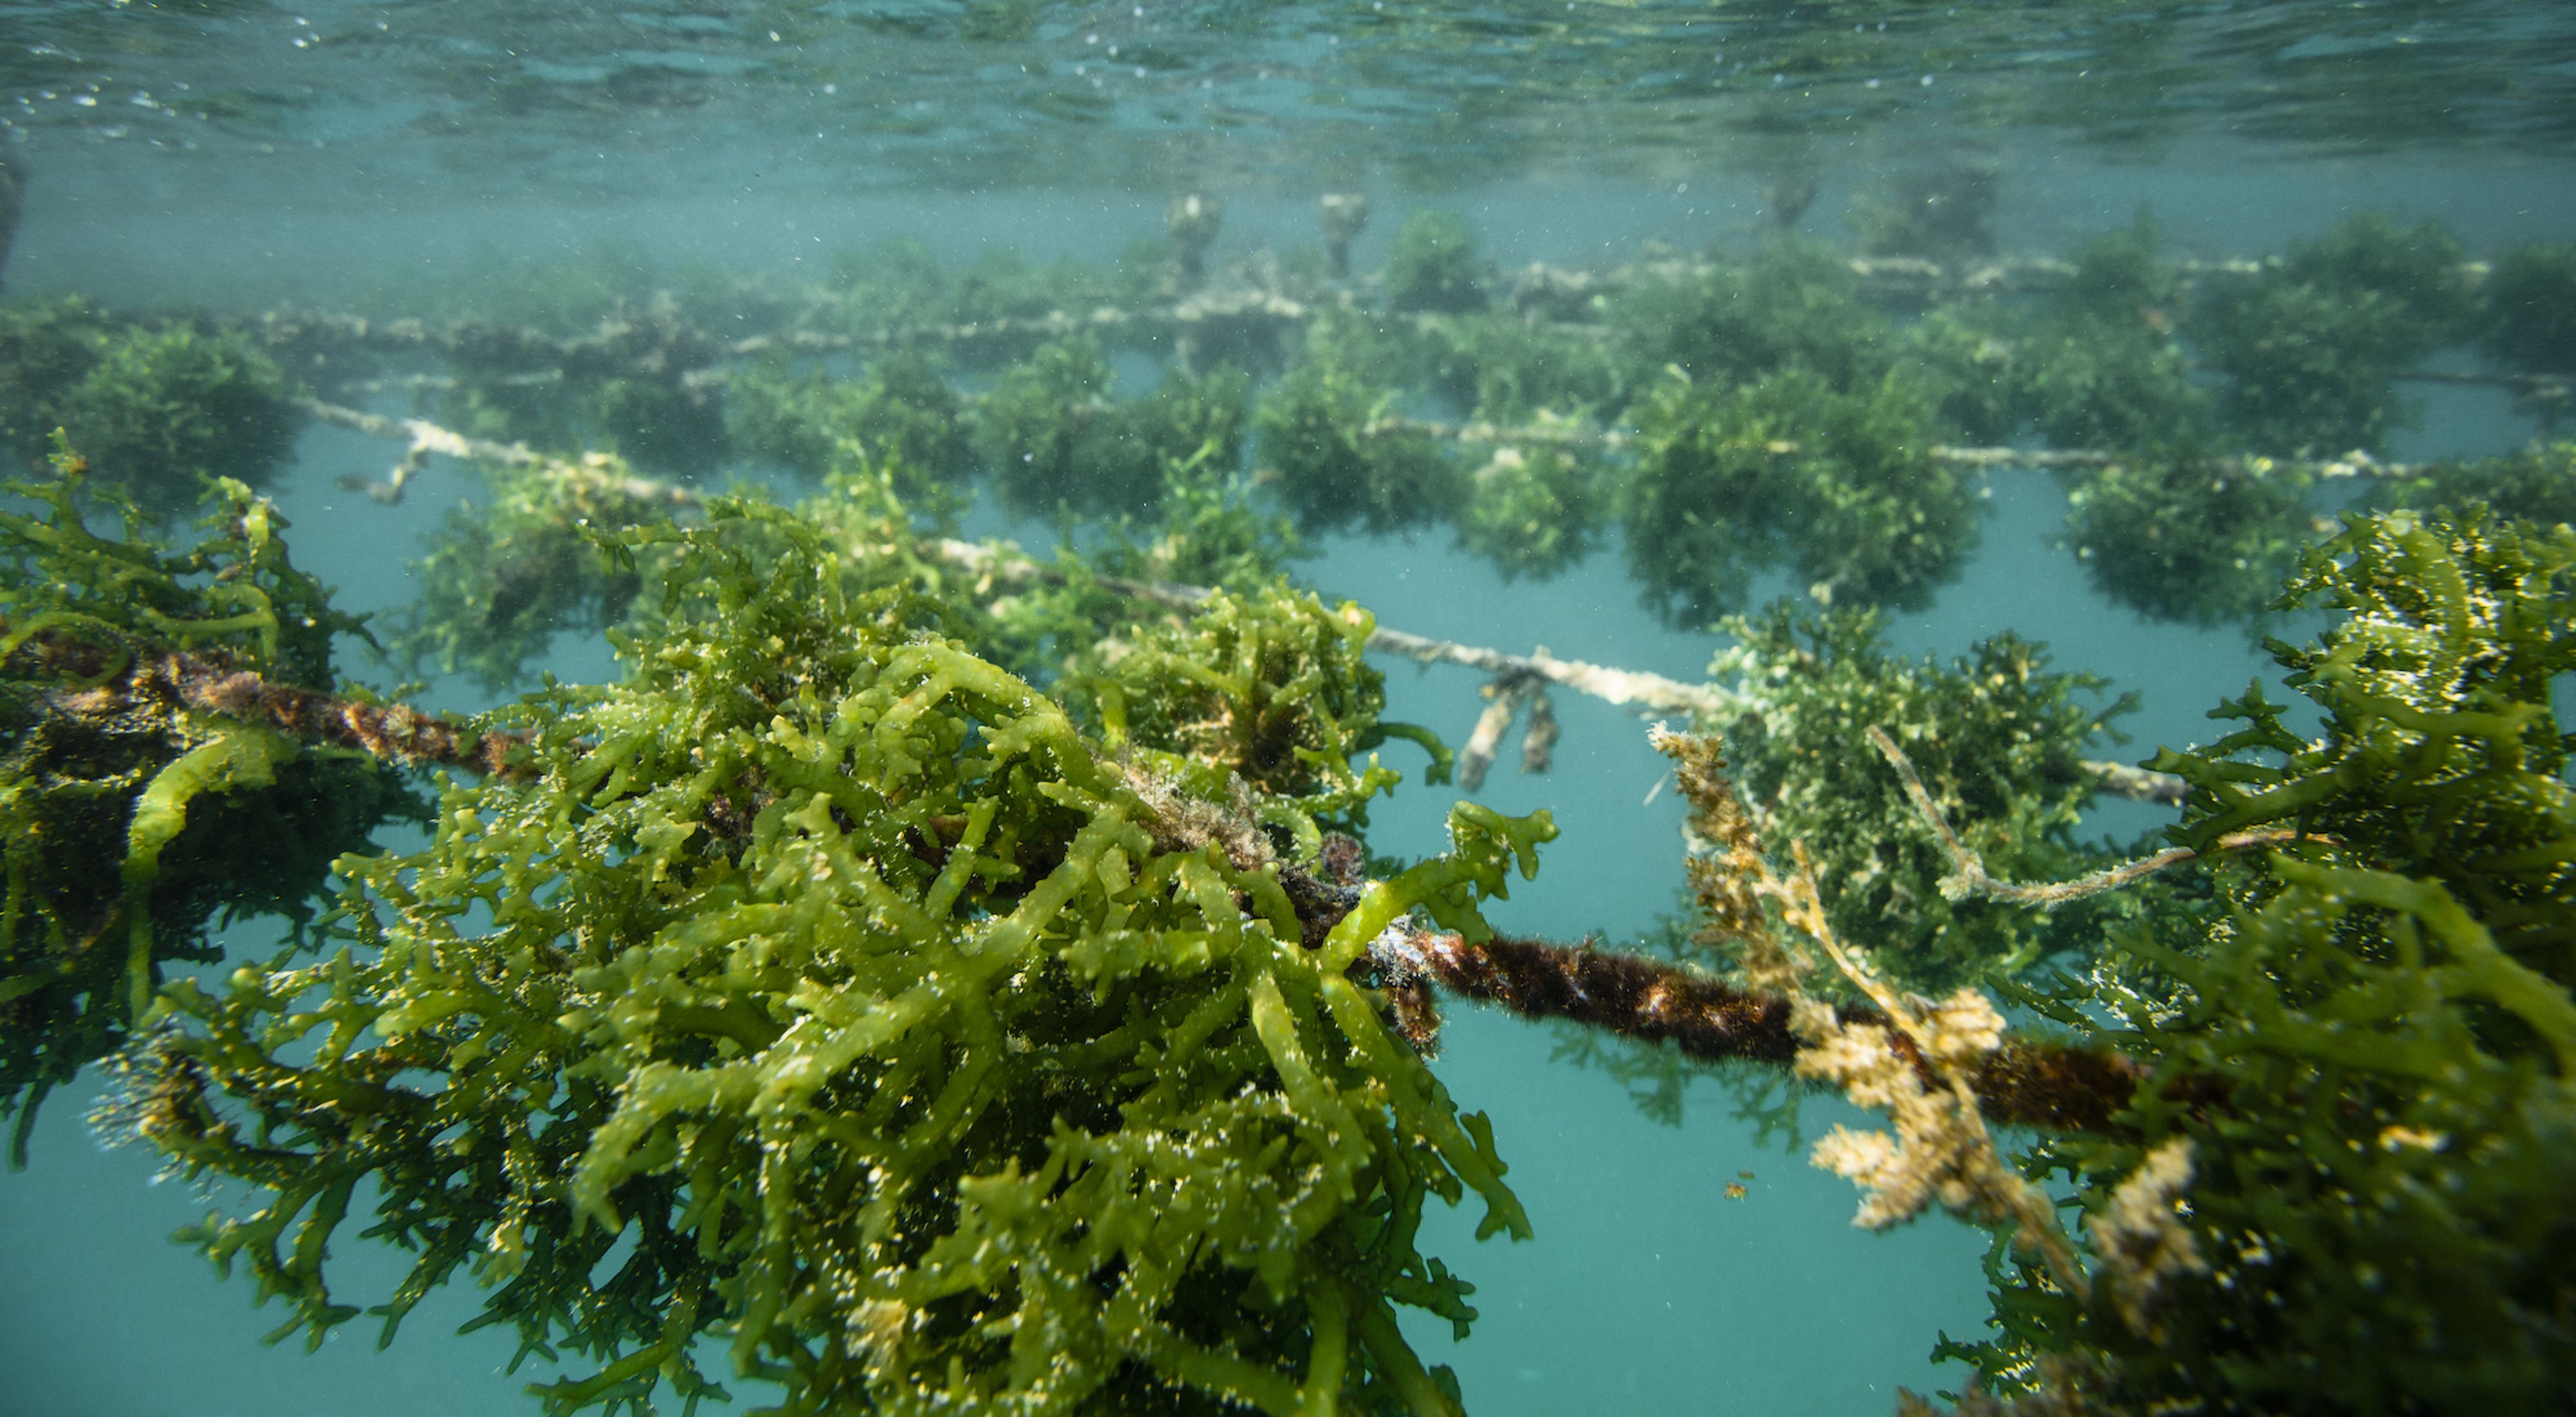 Underwater view of a seaweed farm.